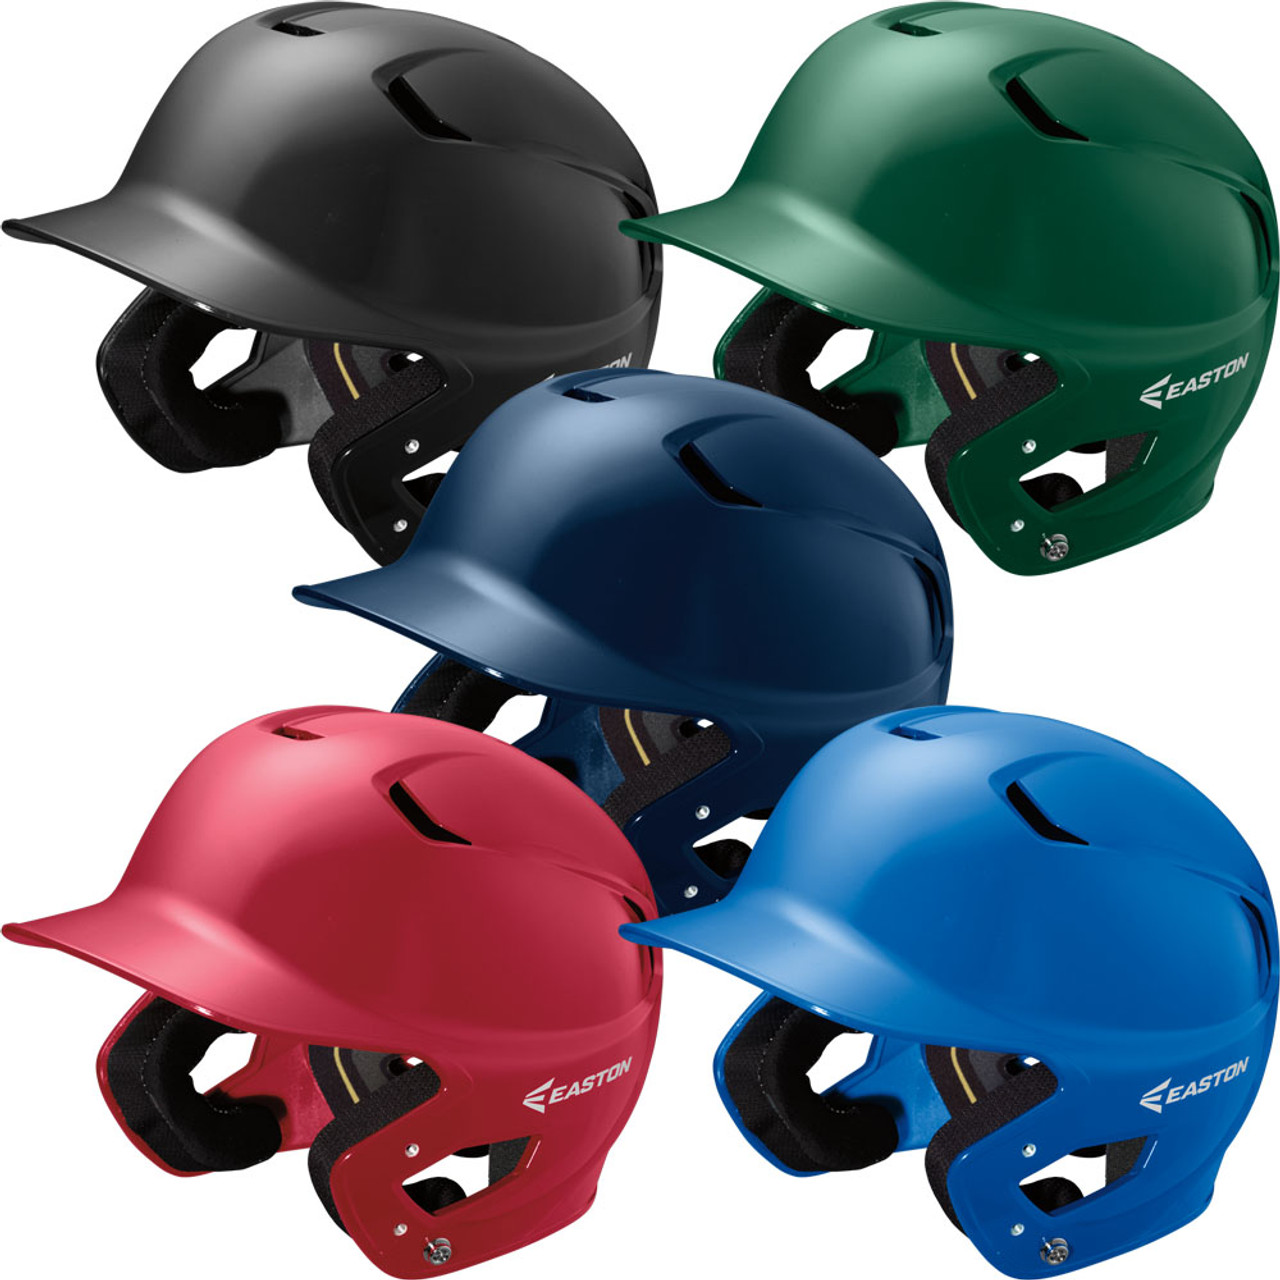 easton-z5-solid-gloss-batting-helmet-a168-080-a168-081-bases-loaded